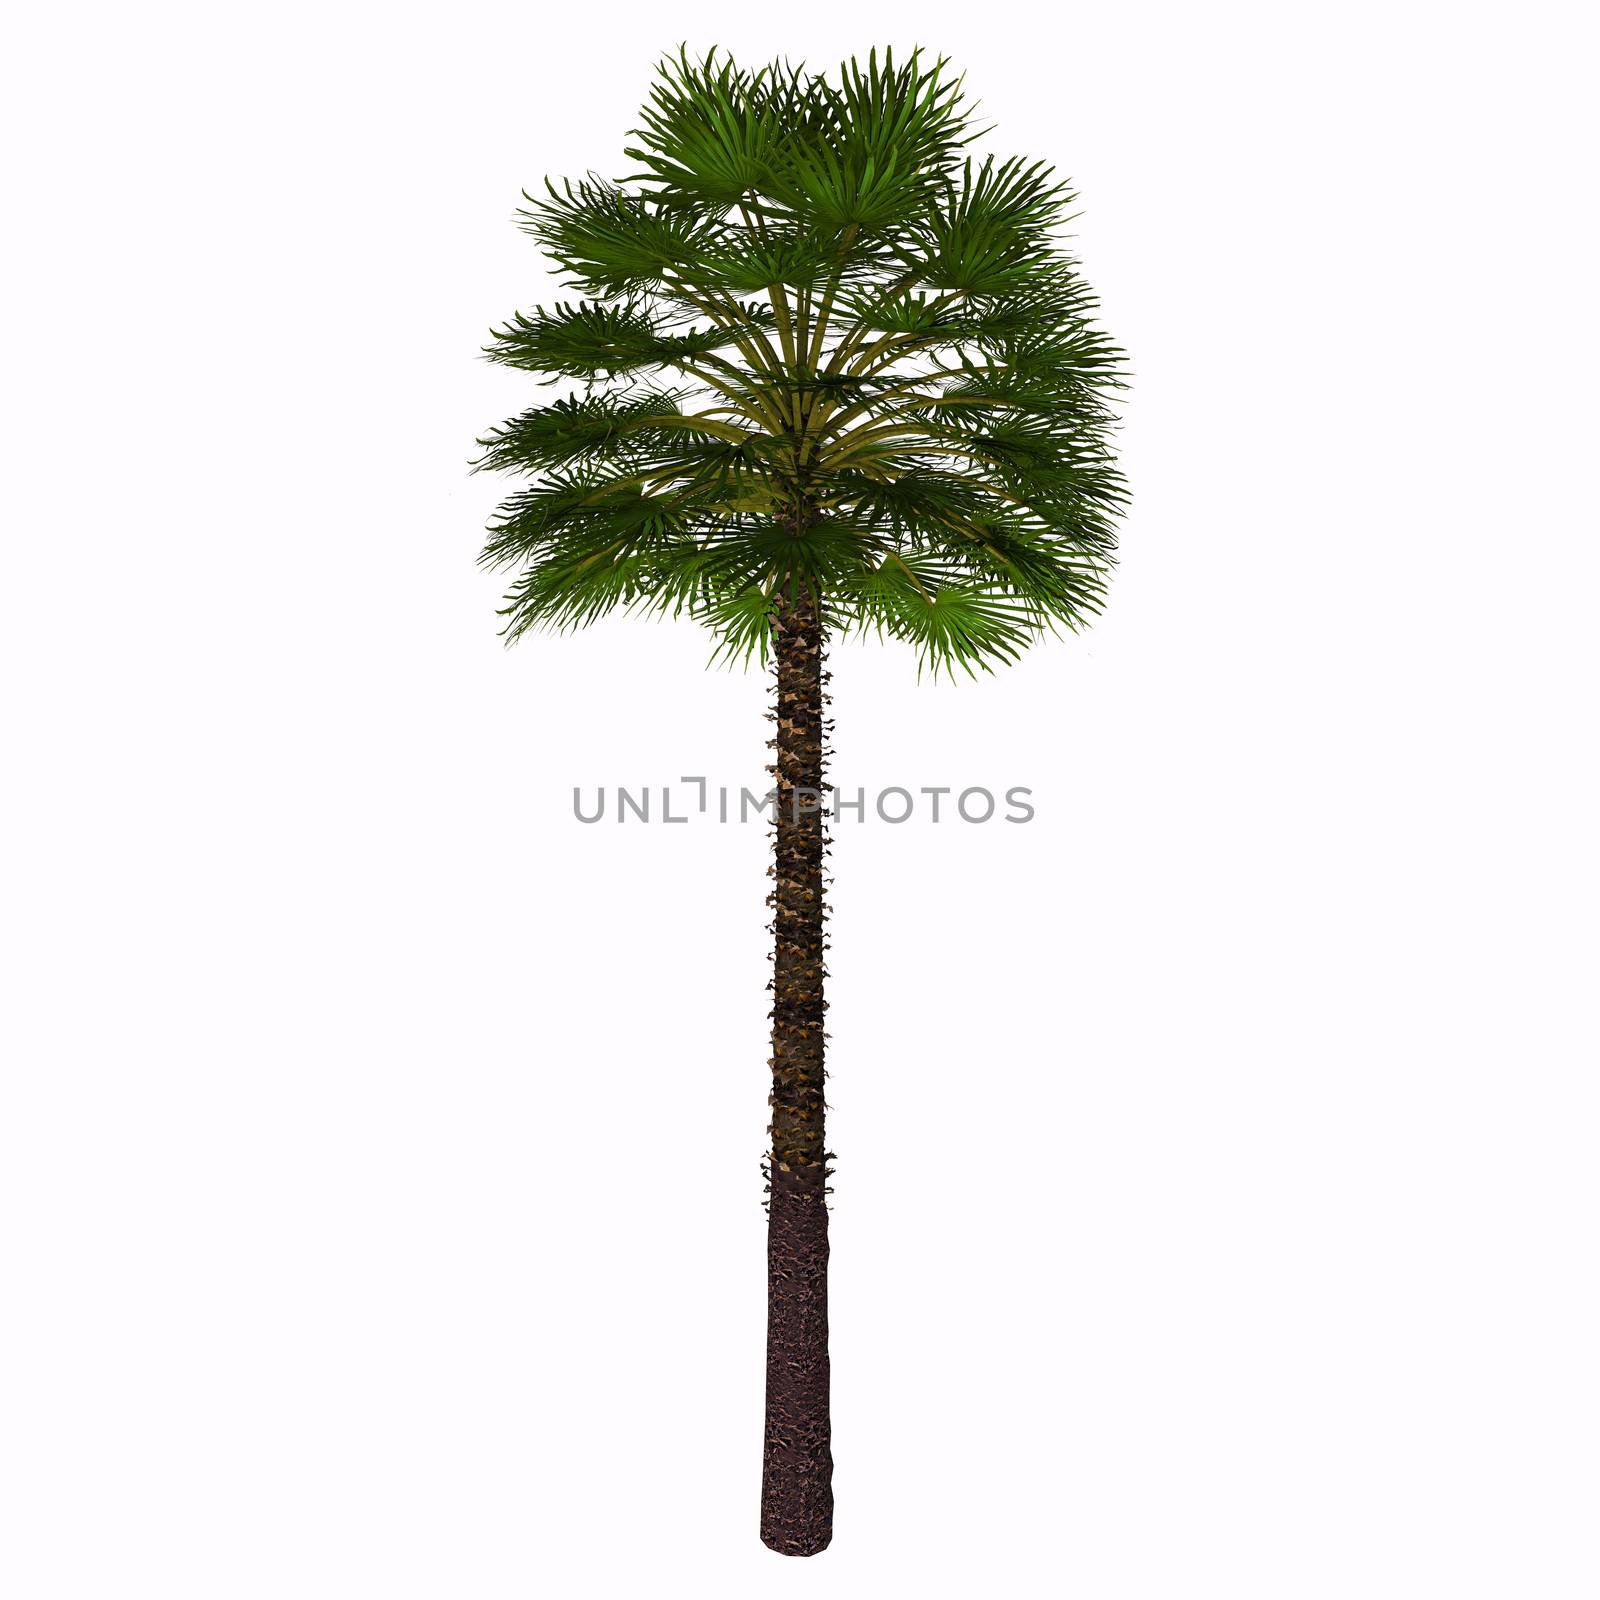 Mediterranean Fan Palm Tree by Catmando